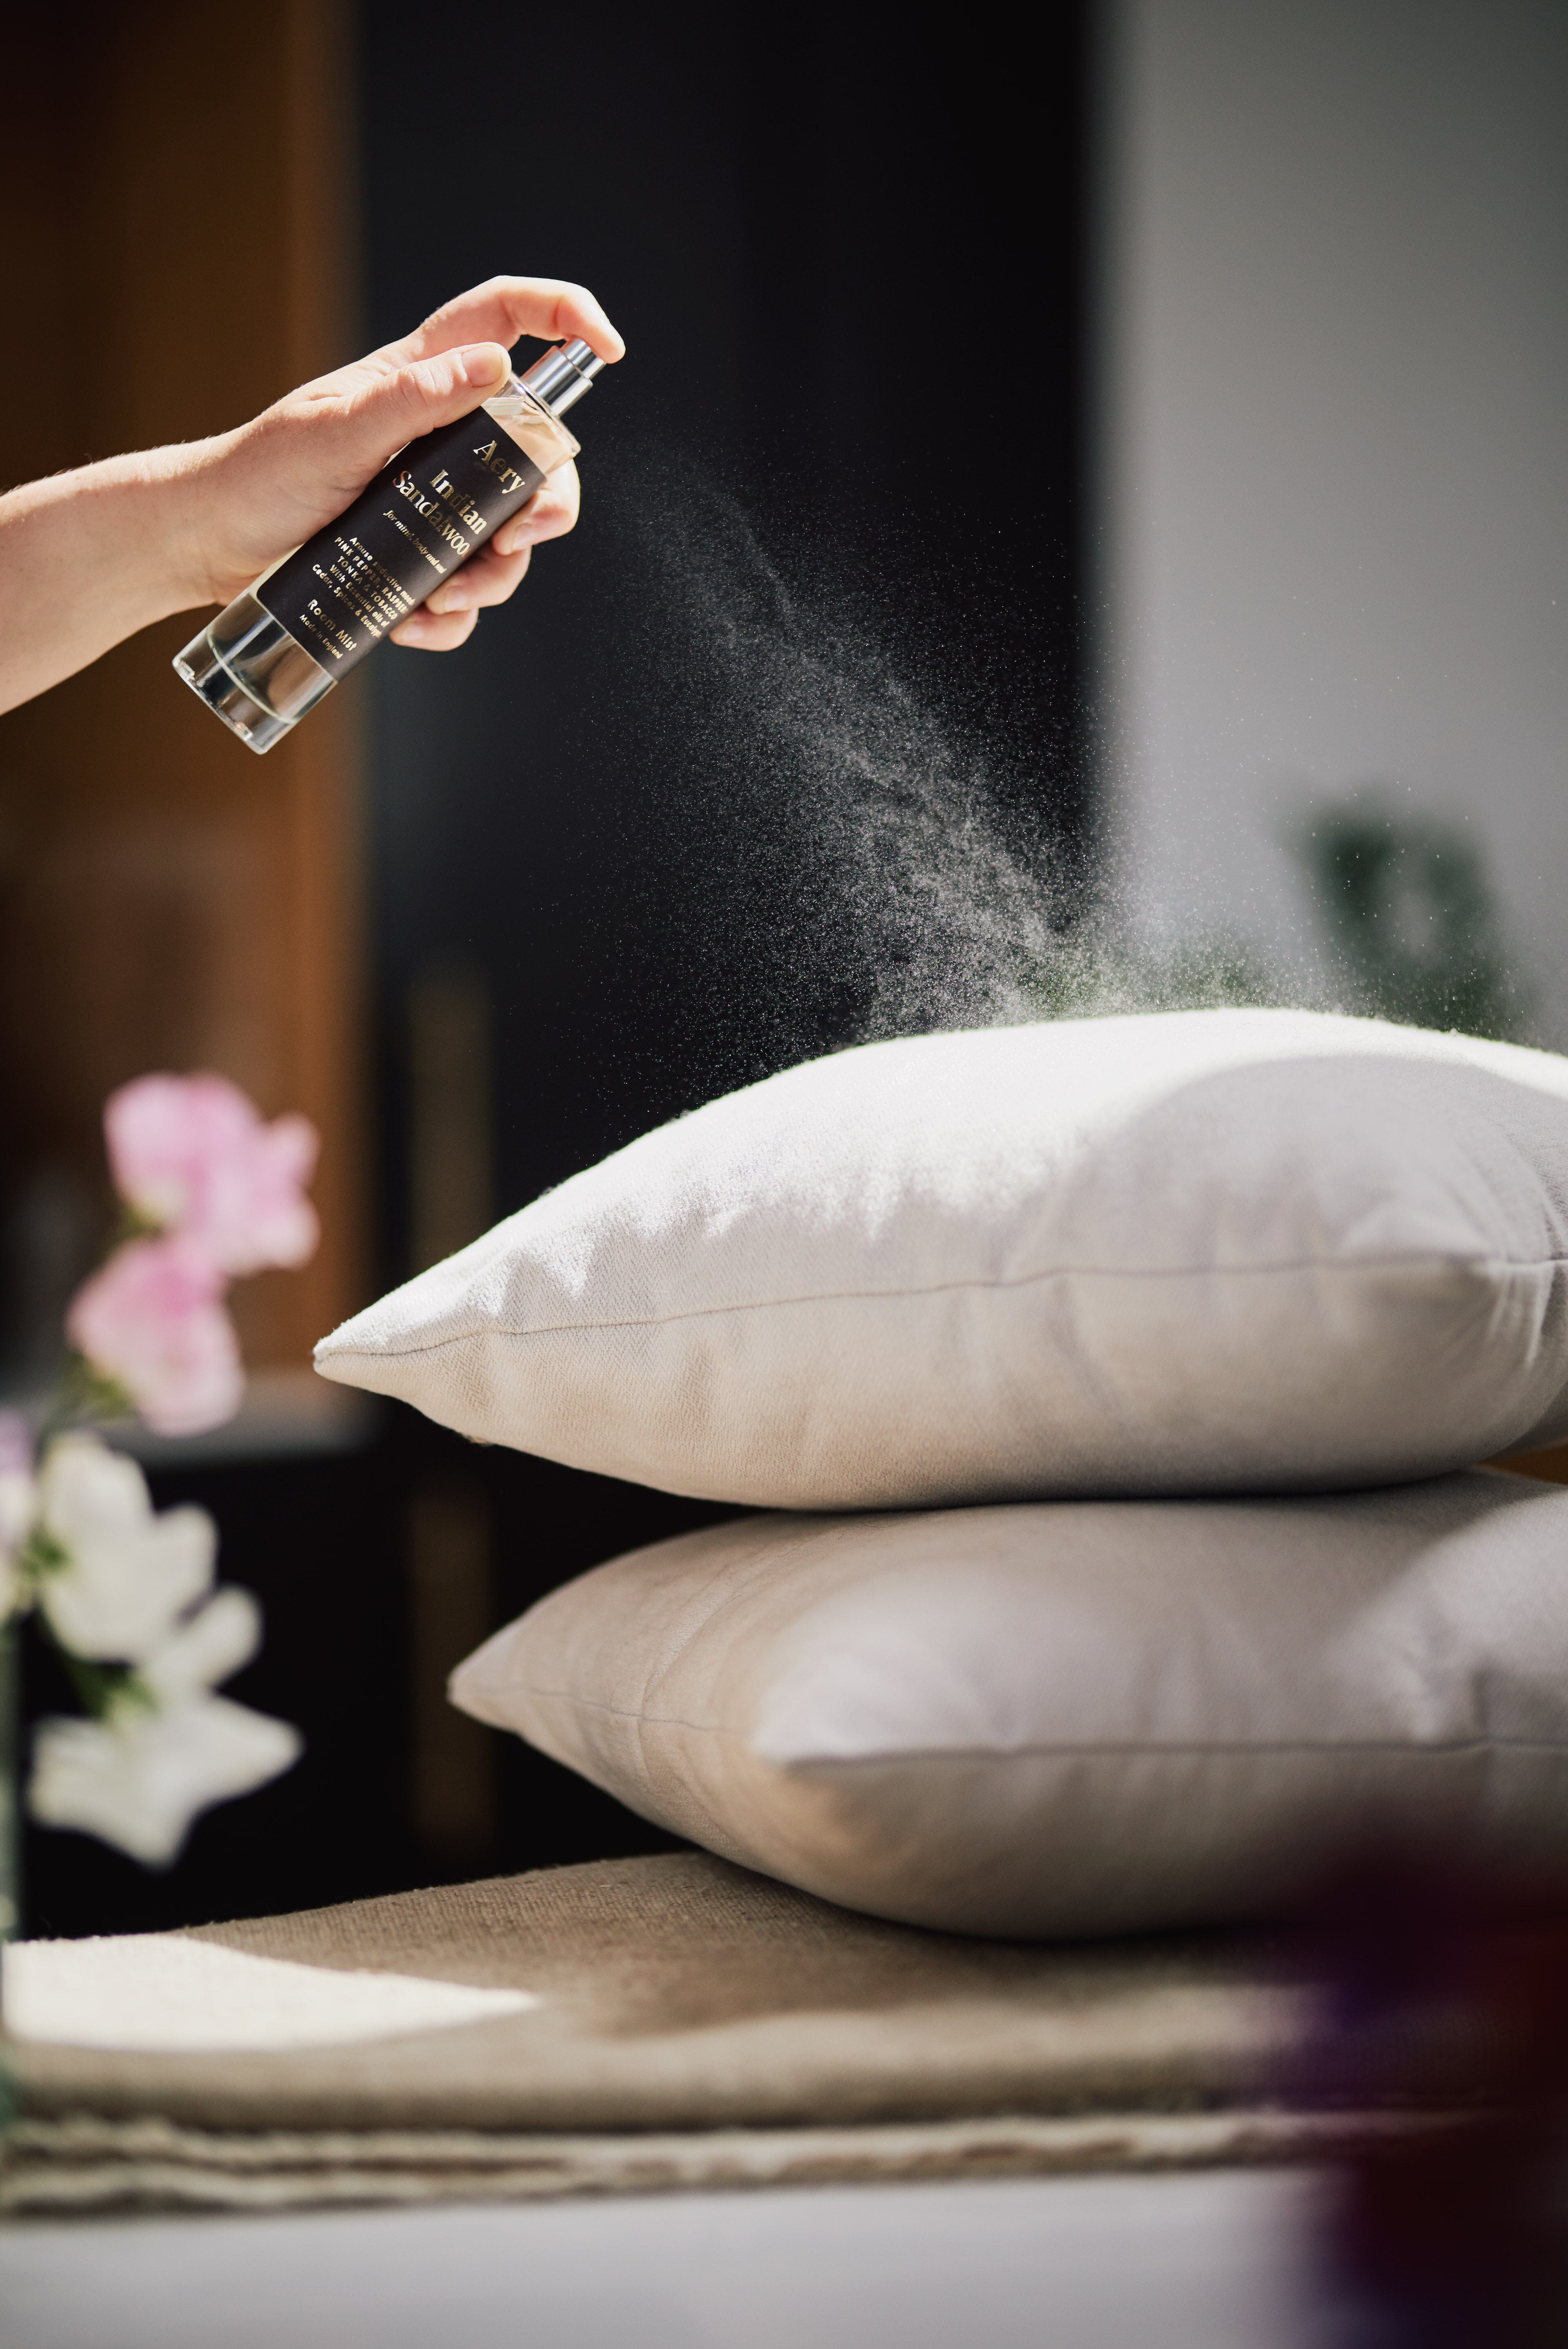 Black Indian Sandalwood room mist by Aery displayed in hand spraying grey cushions 